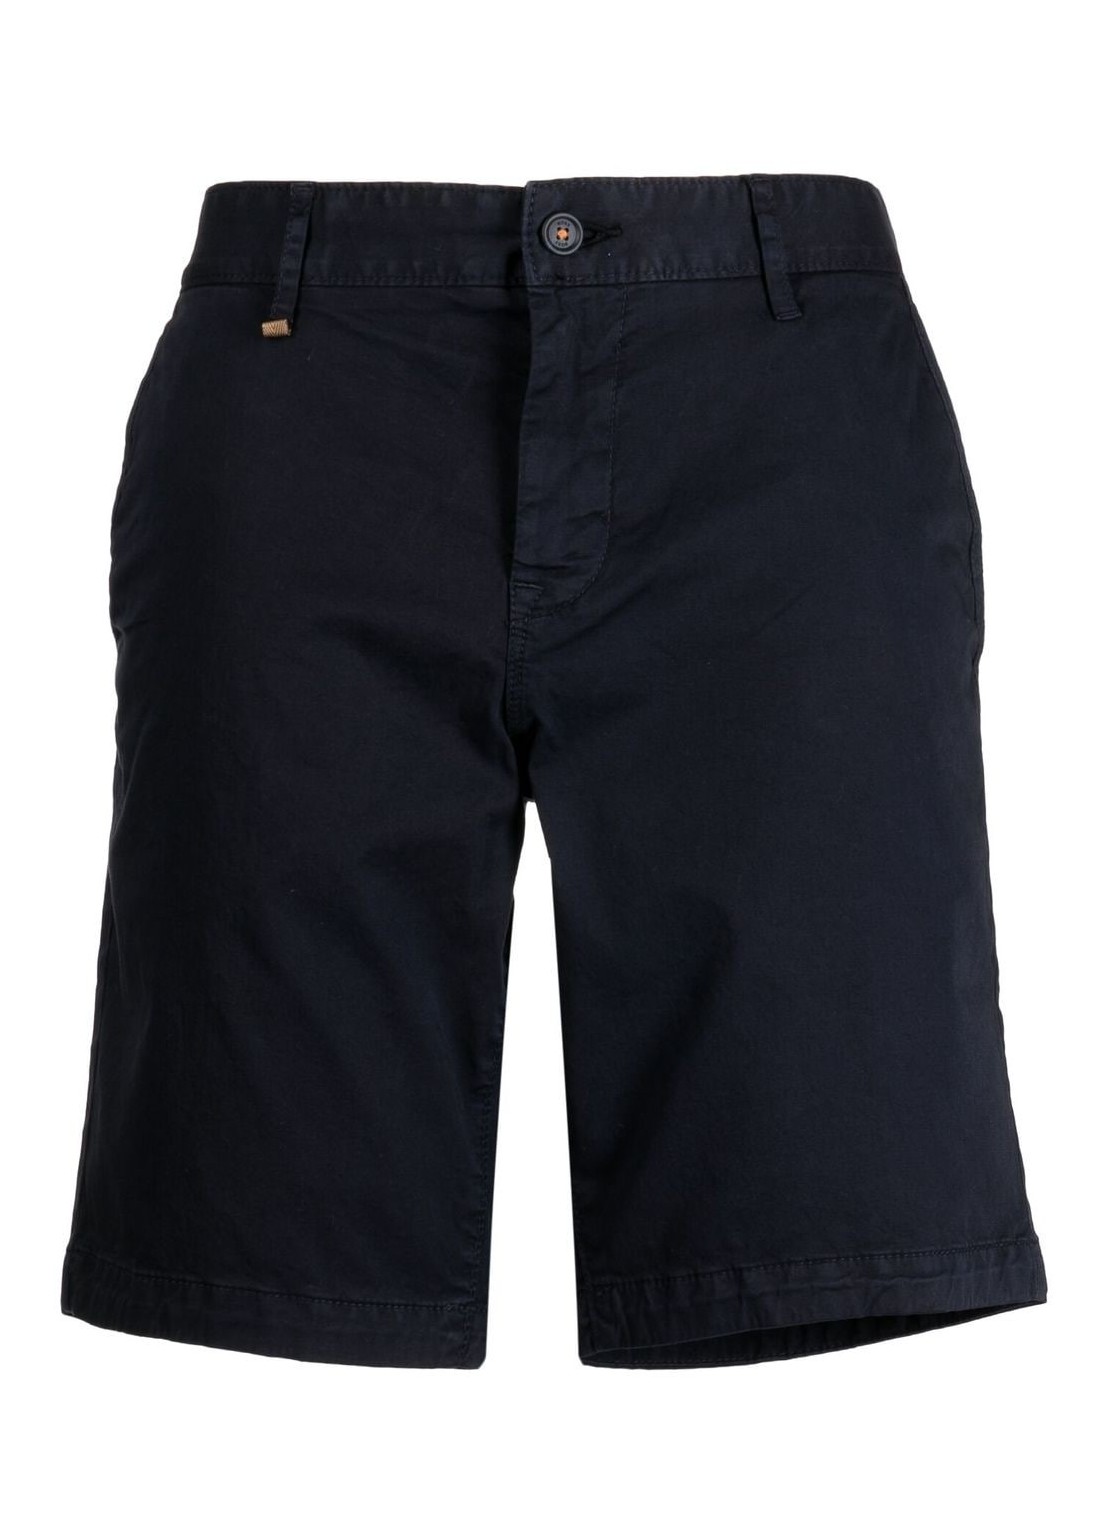 Pantalon corto boss short pant man schino-slim-short st 50489112 404 talla 31
 